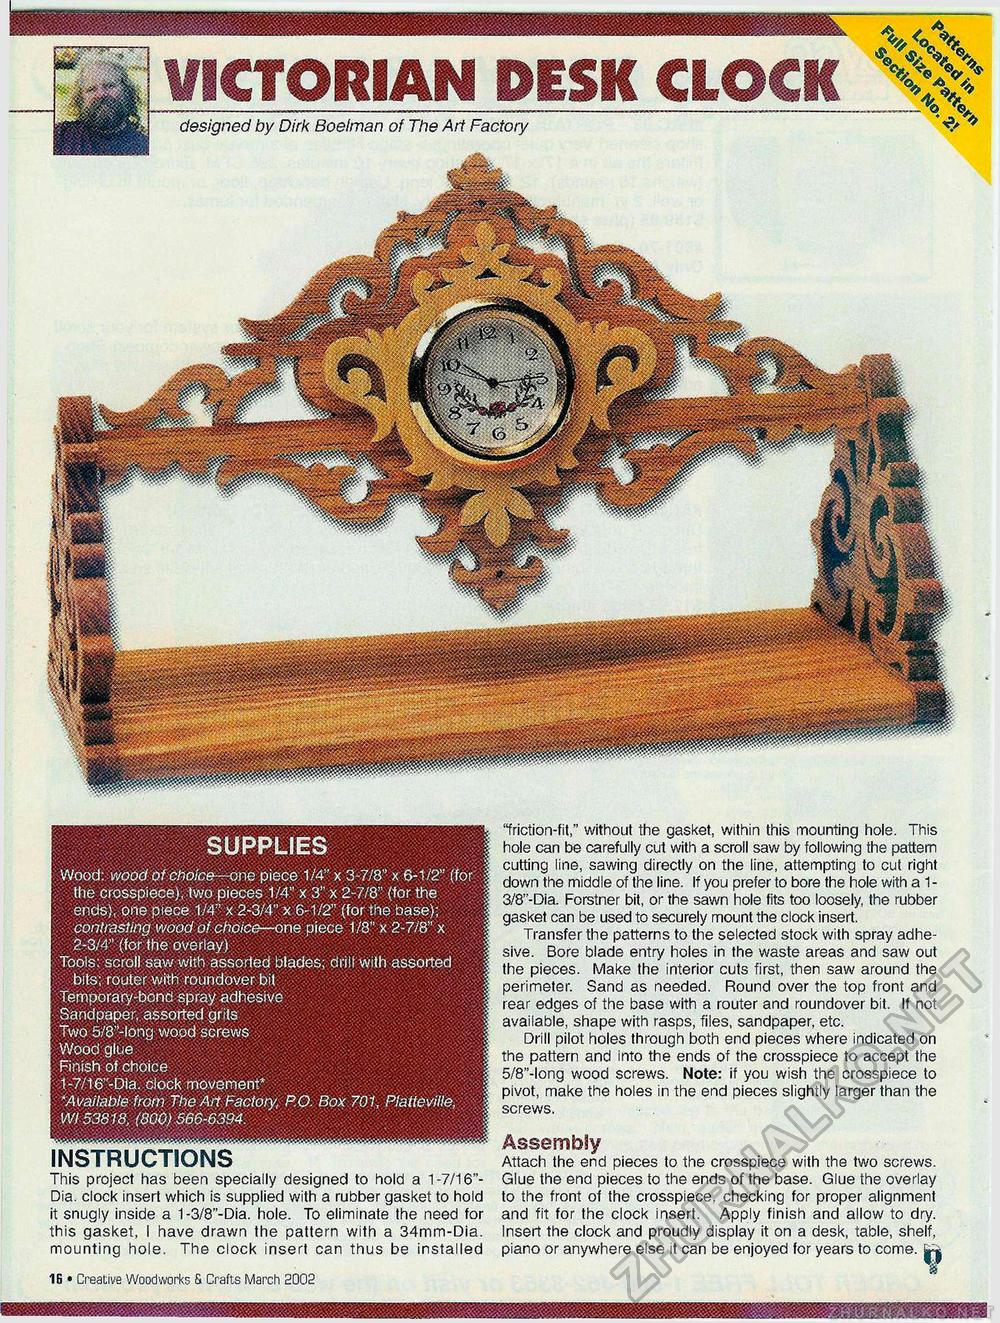 Creative Woodworks & crafts 2002-03,  16